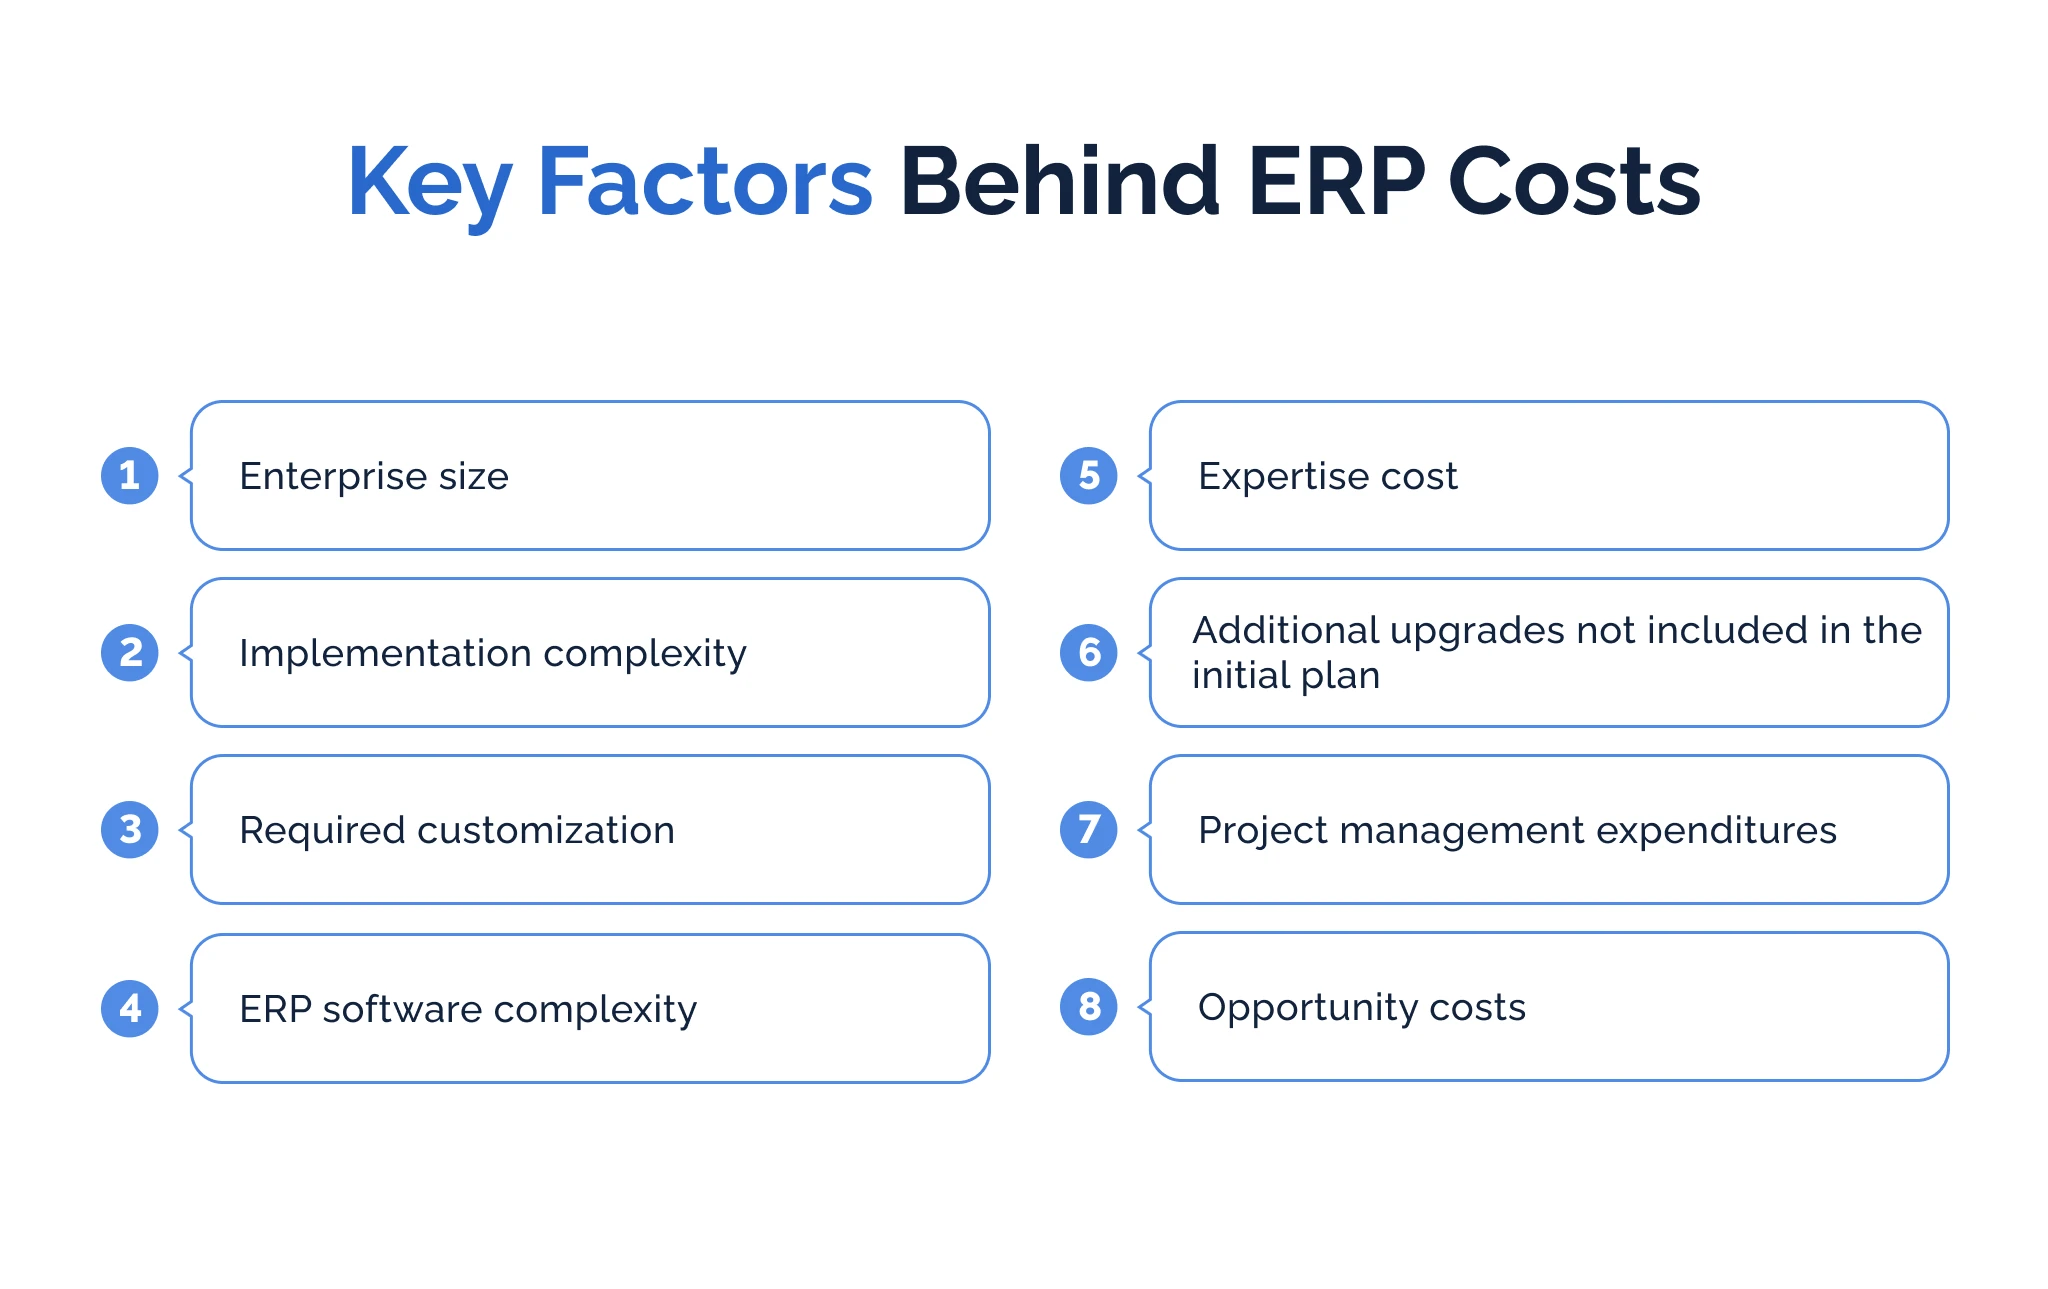 Key factors behind ERP costs